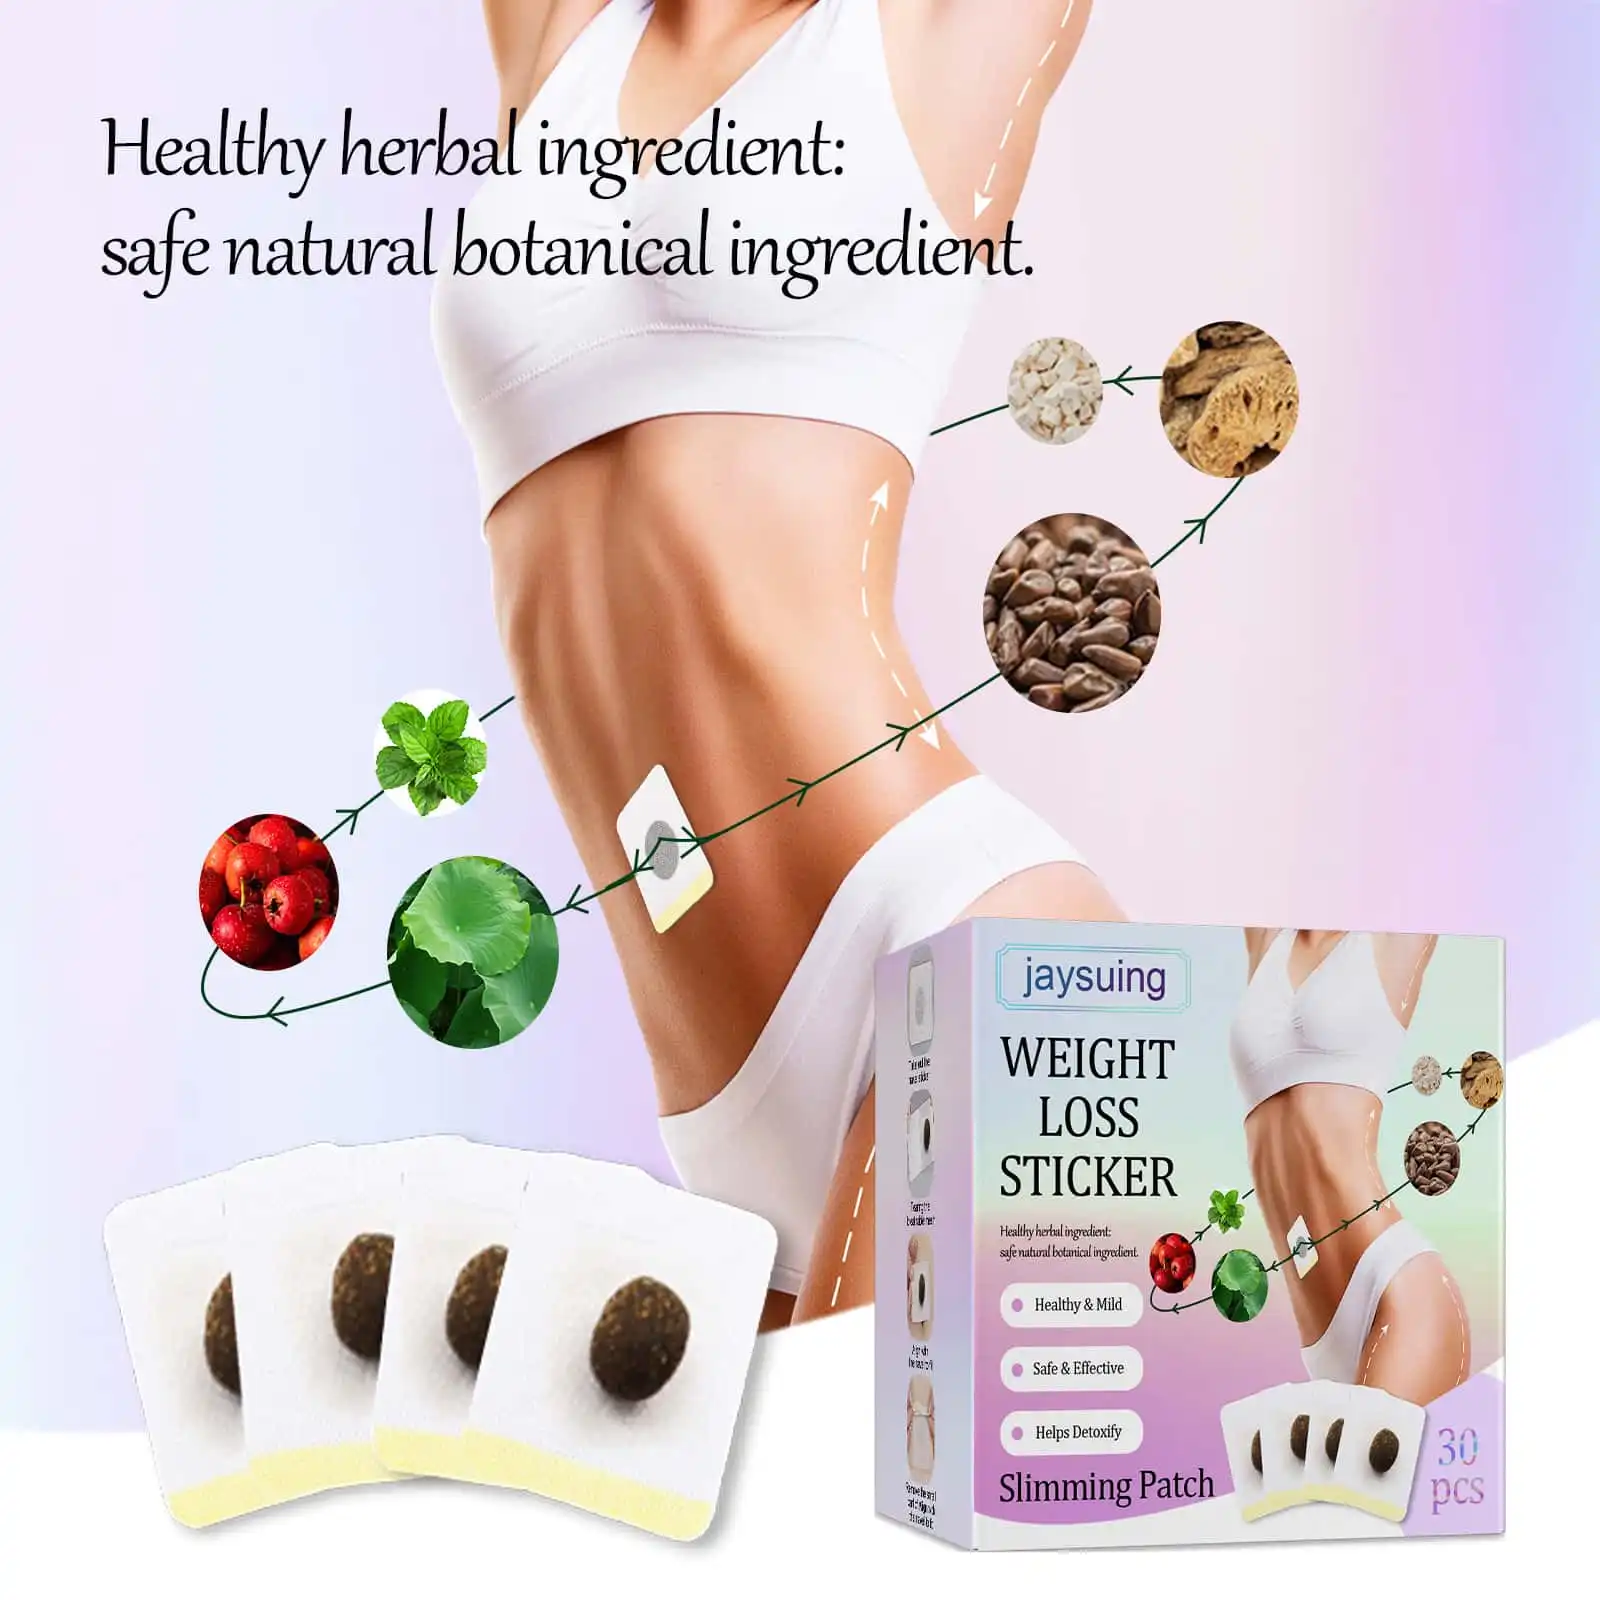 JAYSUING Weight Loss Sticker - Detoxifying Herbal Slimming P...